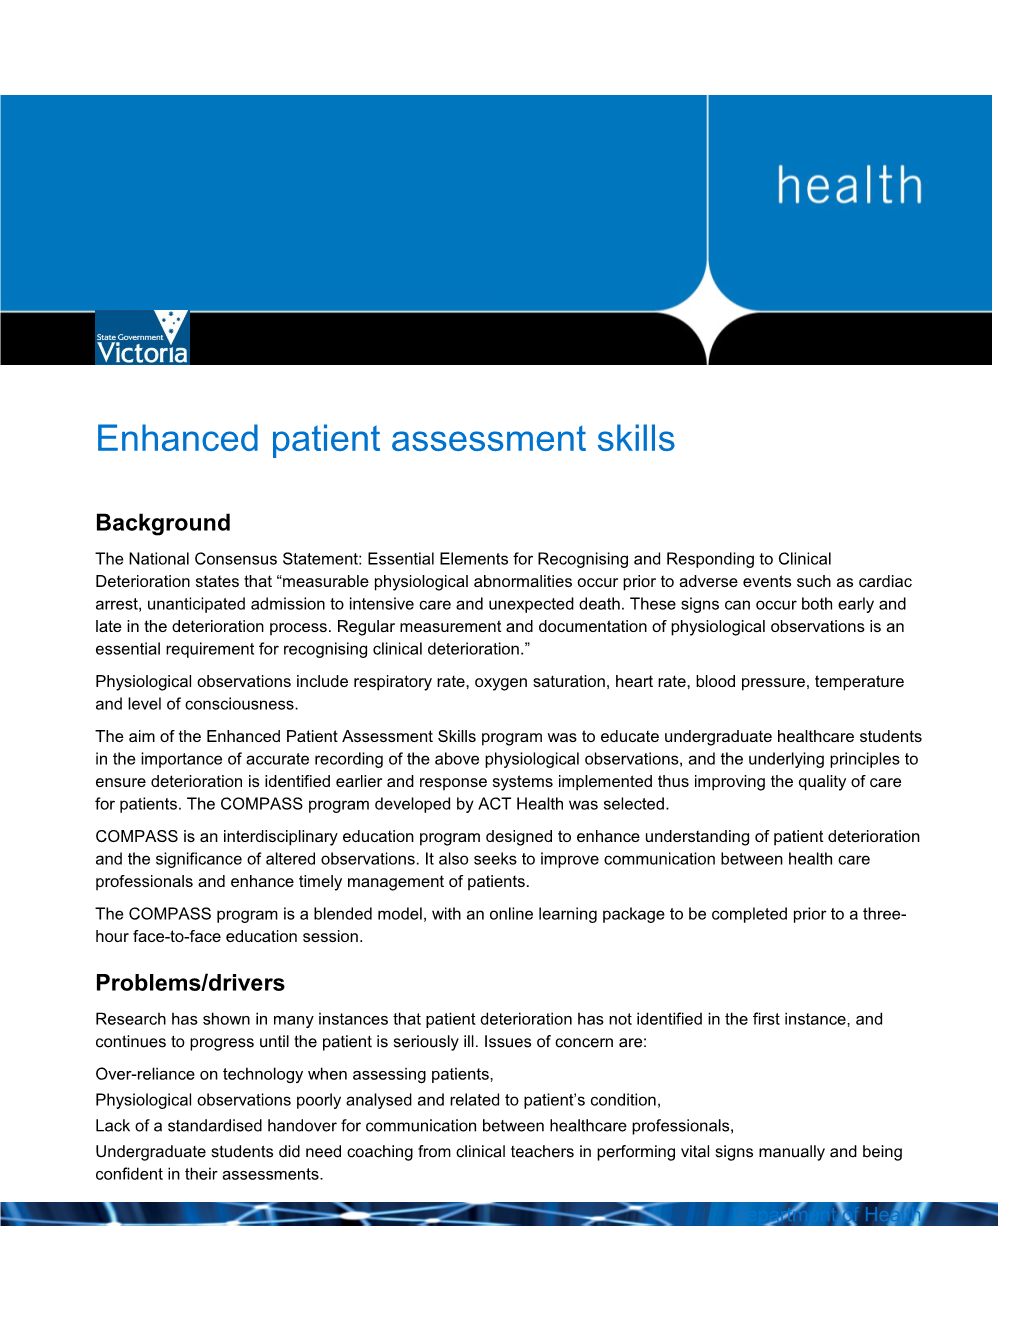 Enhanced Patient Assessment Skills